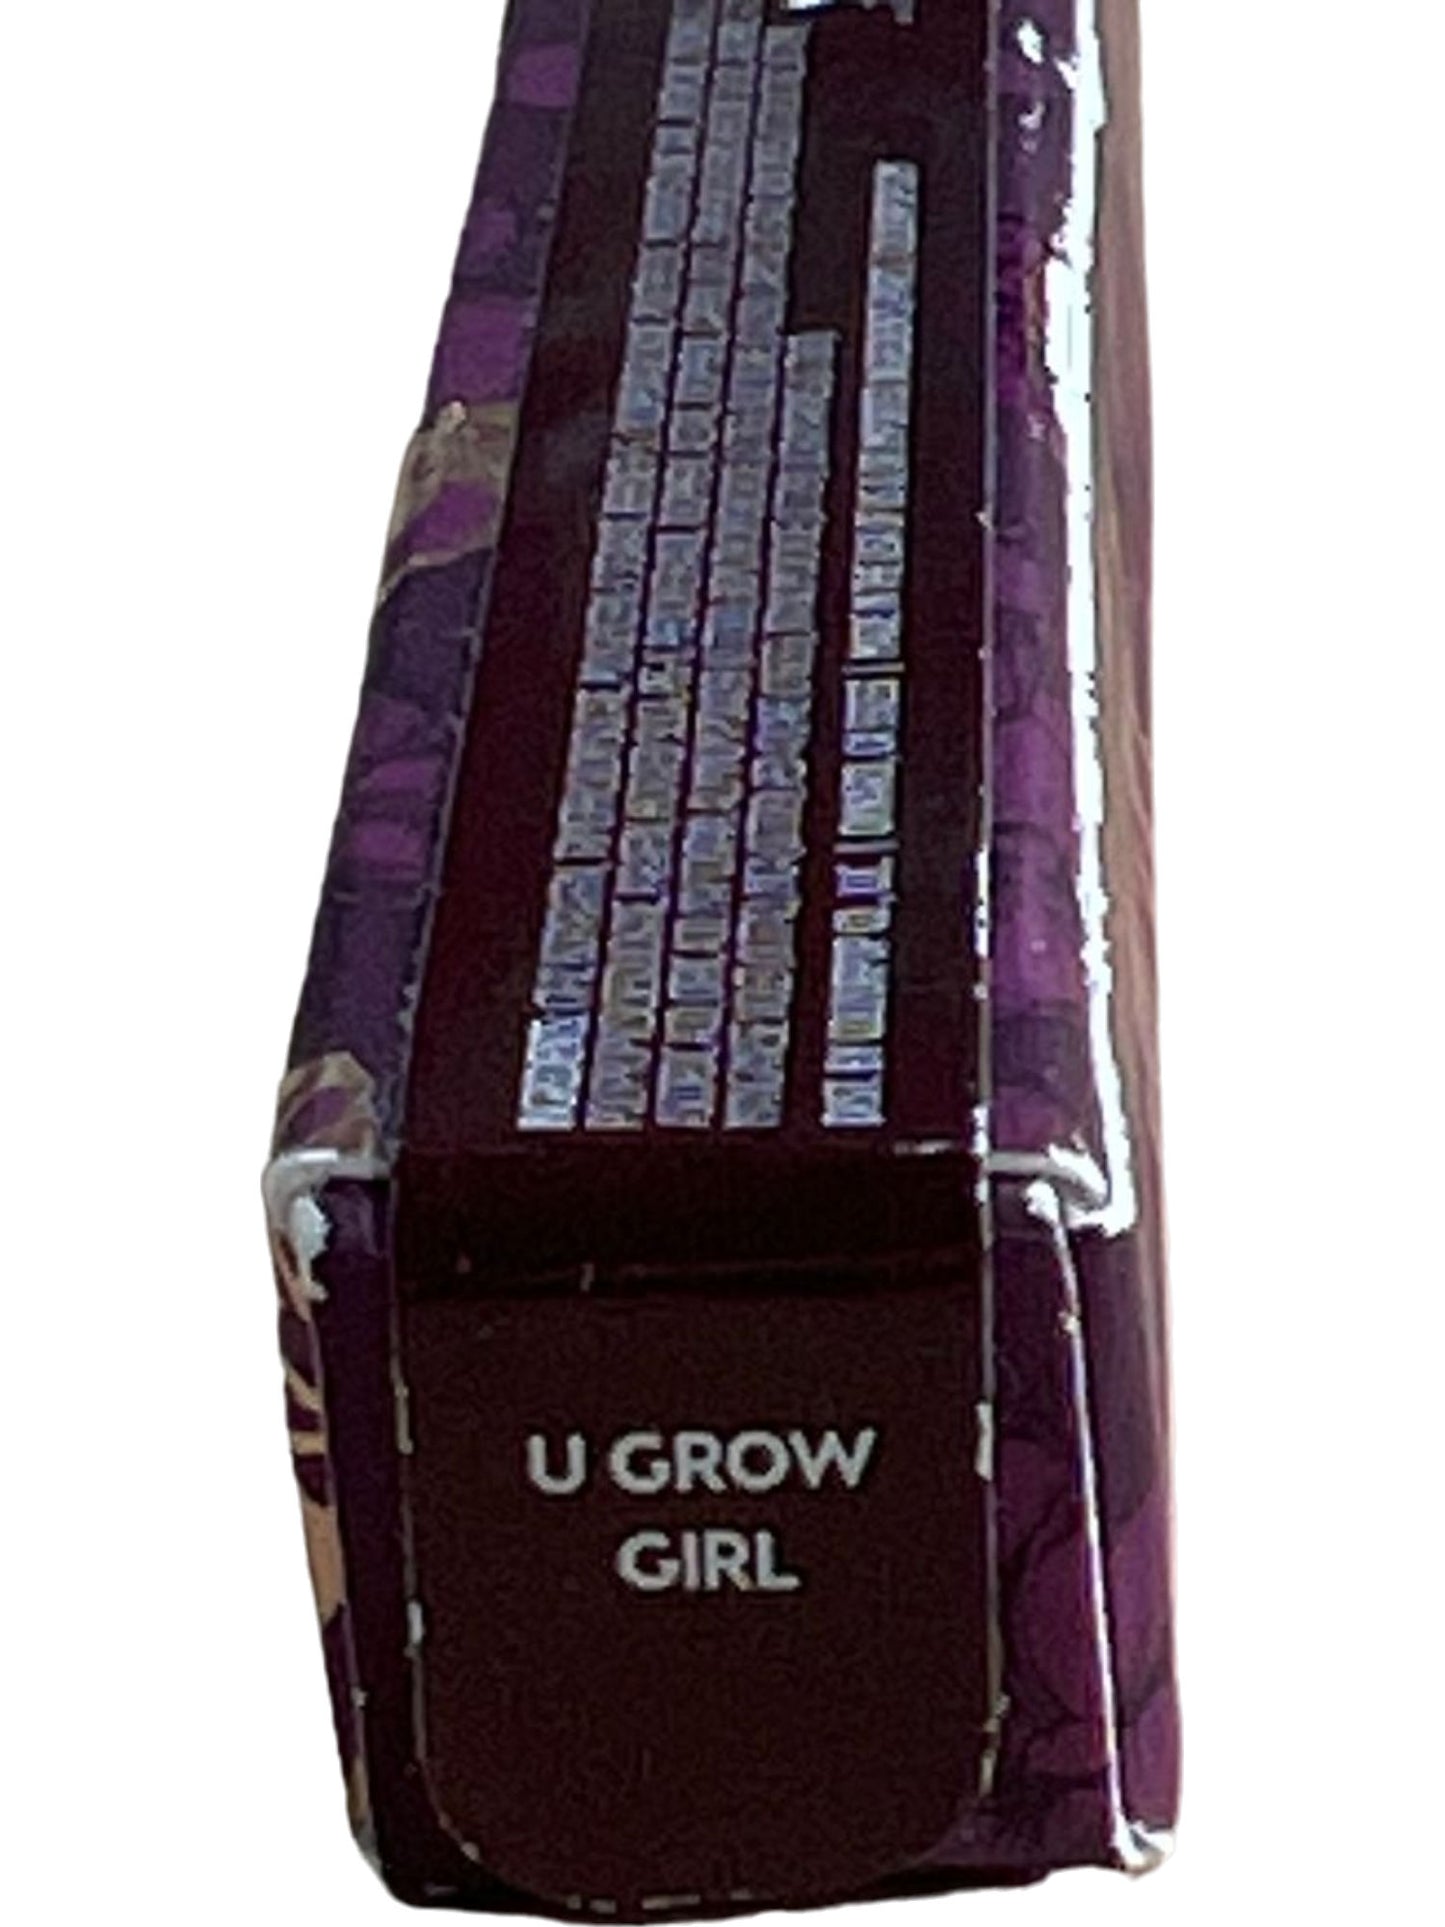 ColourPop Purple Boxed U GROW GIRL Mascara